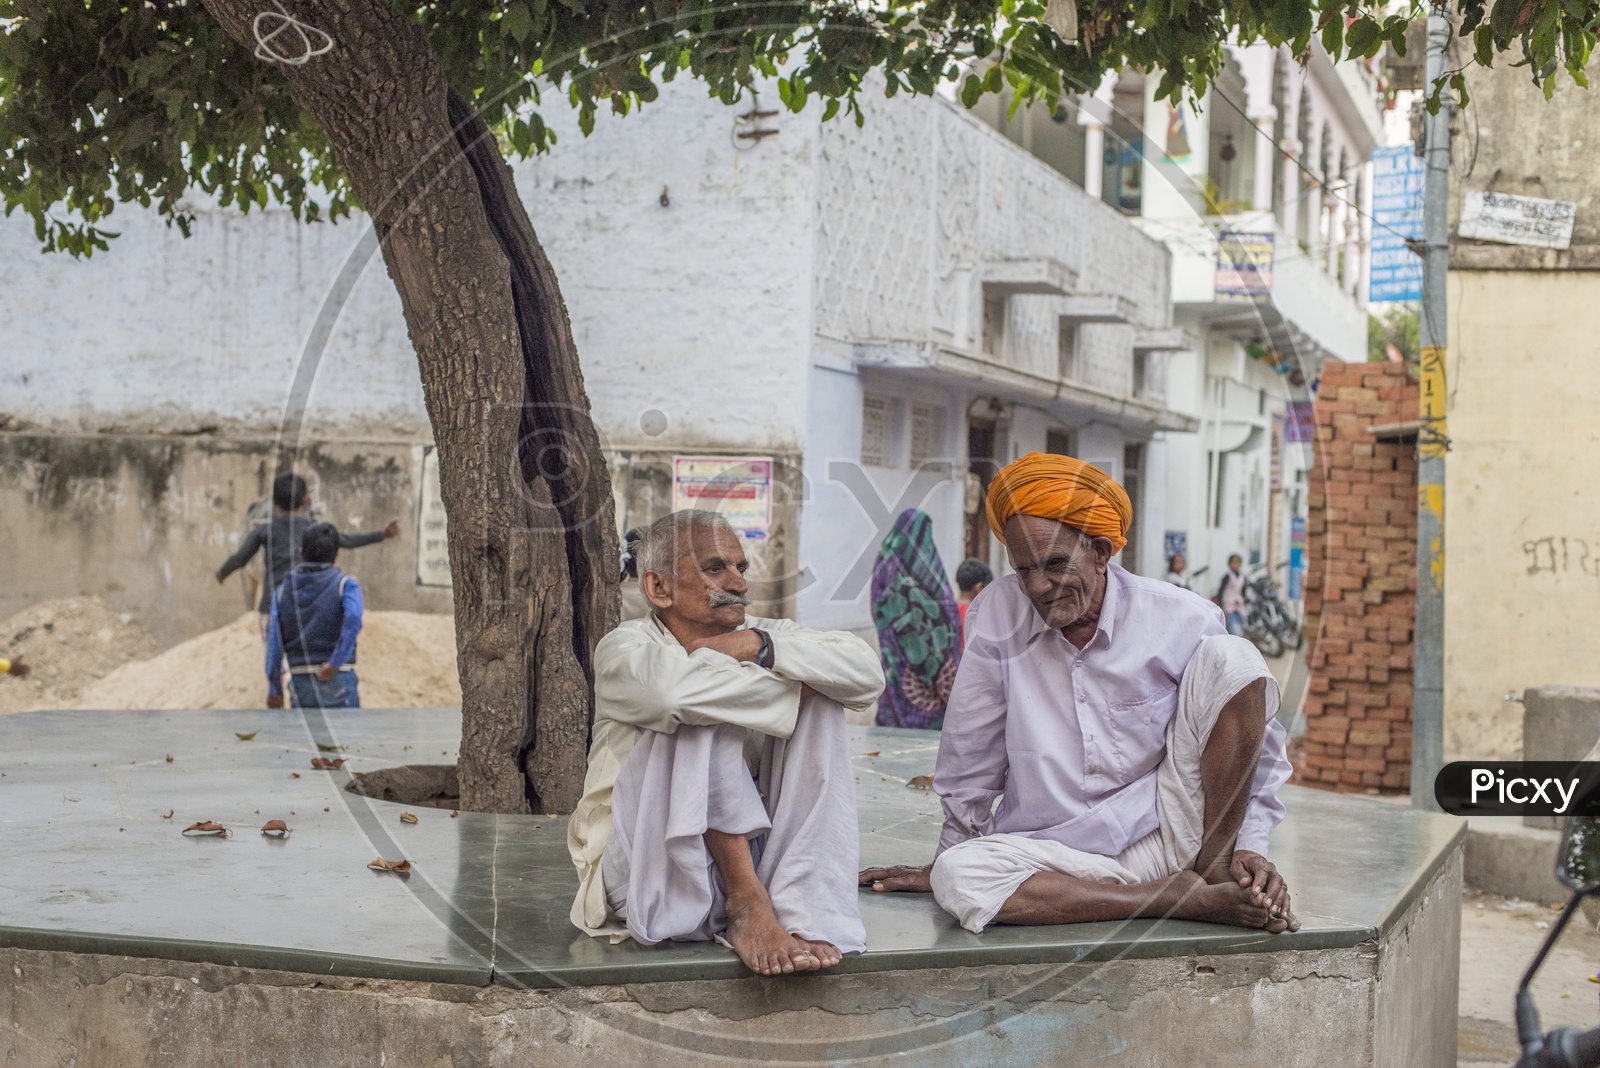 Rajasthani Men on Streets of Pushkar